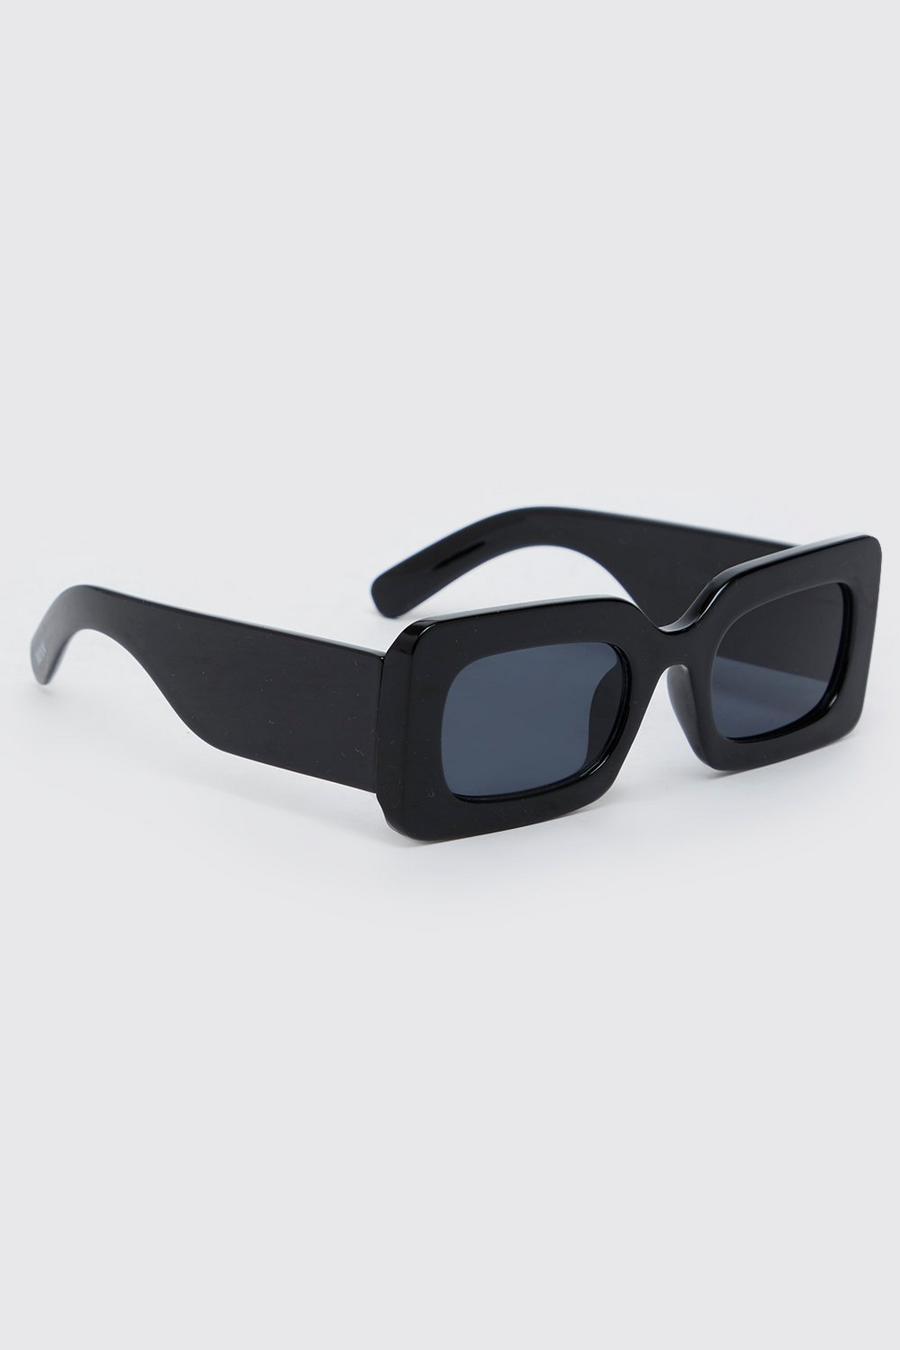 Daylumin Rectangle Retro Chunky Square Wrap Around Sunglasses